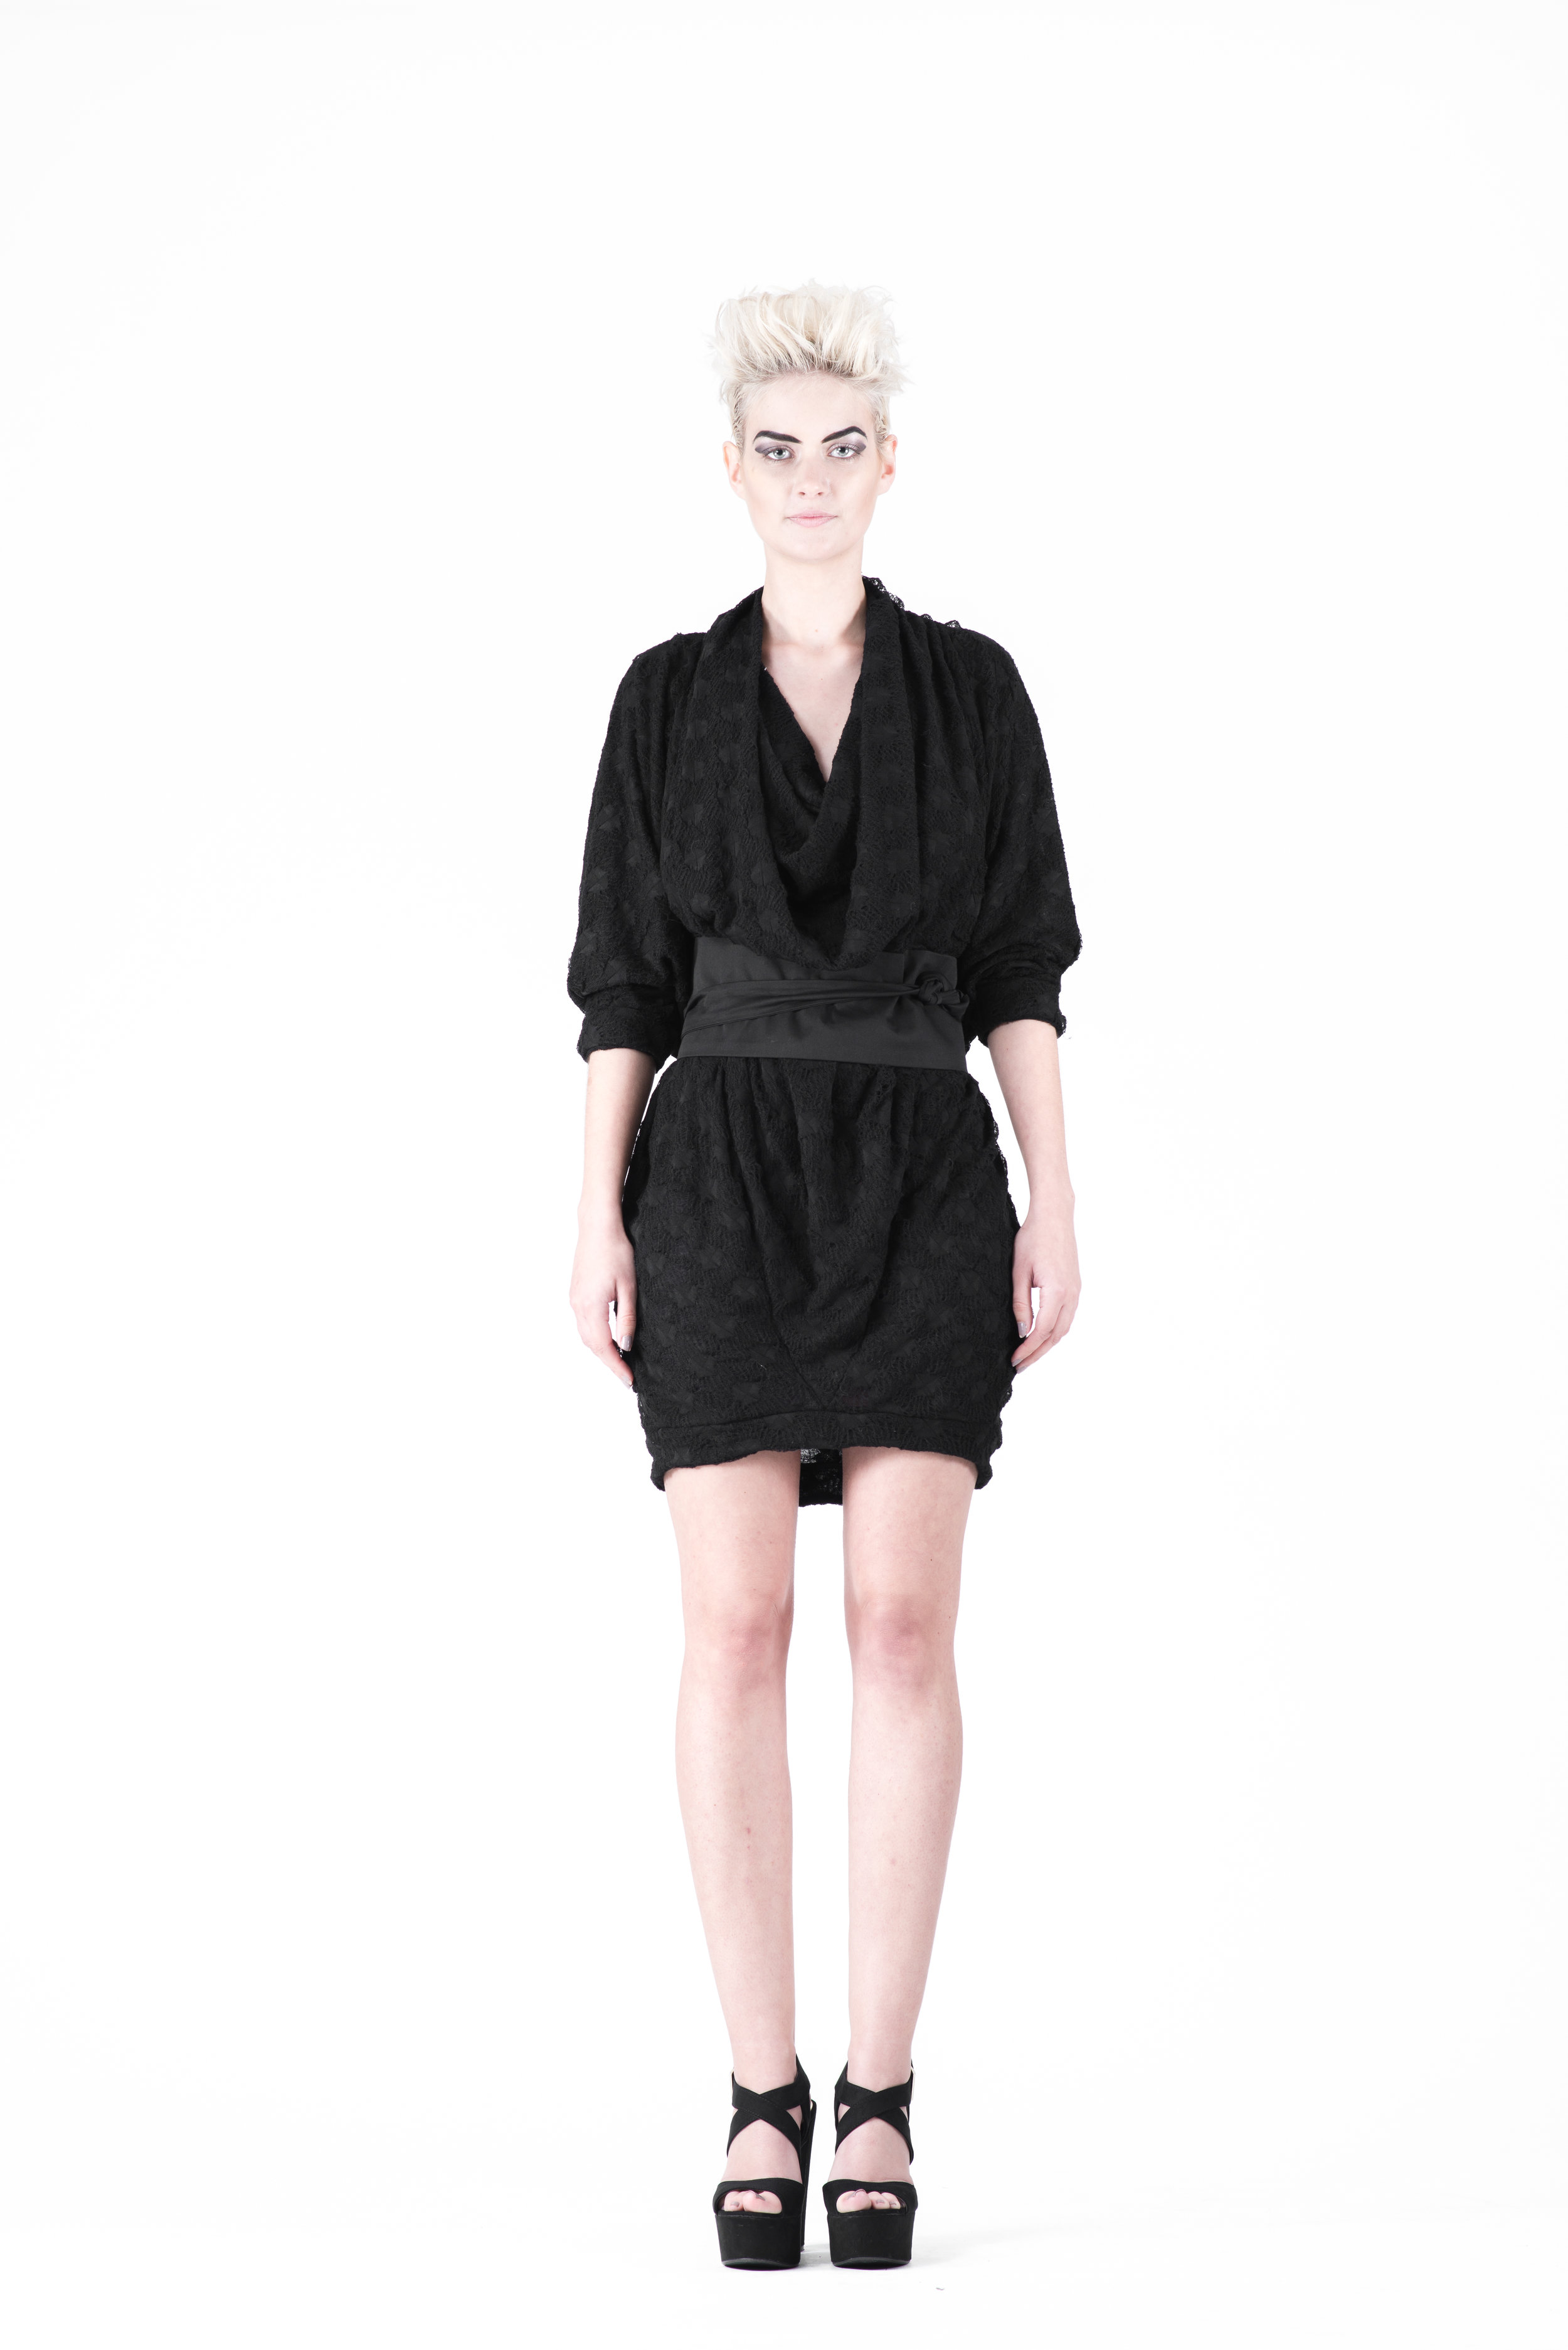 zaramia-ava-zaramiaava-leeds-fashion-designer-ethical-sustainable-tailored-minimalist-aya-aoi-black-dress-belt-dress-versatile-texture-obi-drape-cowl-styling-womenswear-models-photoshoot-78